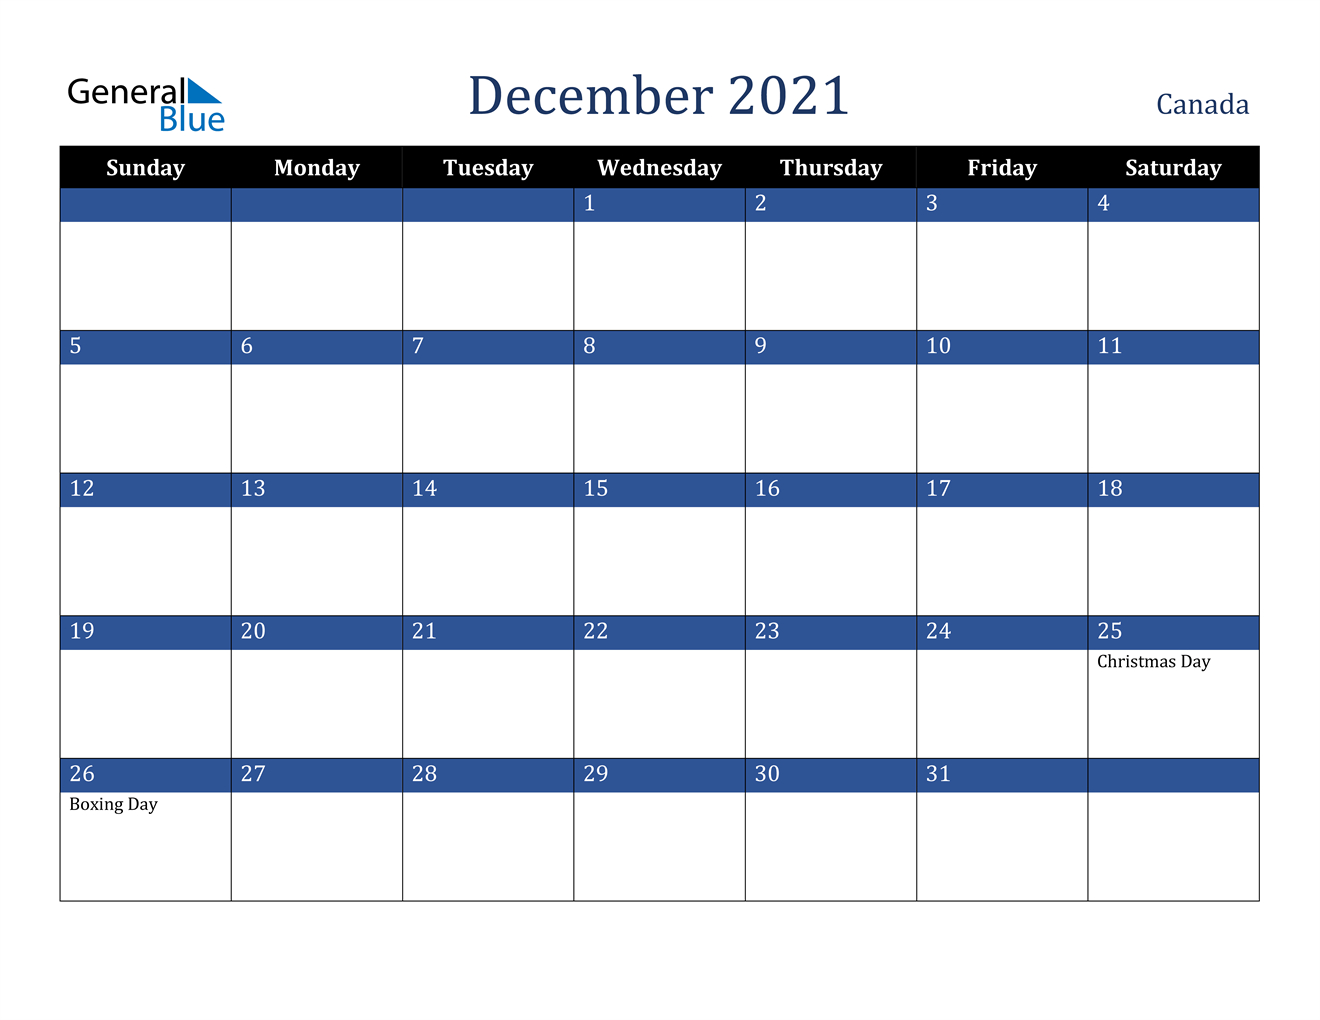 December 2021 Calendar - Canada December 2021 Calendar Image